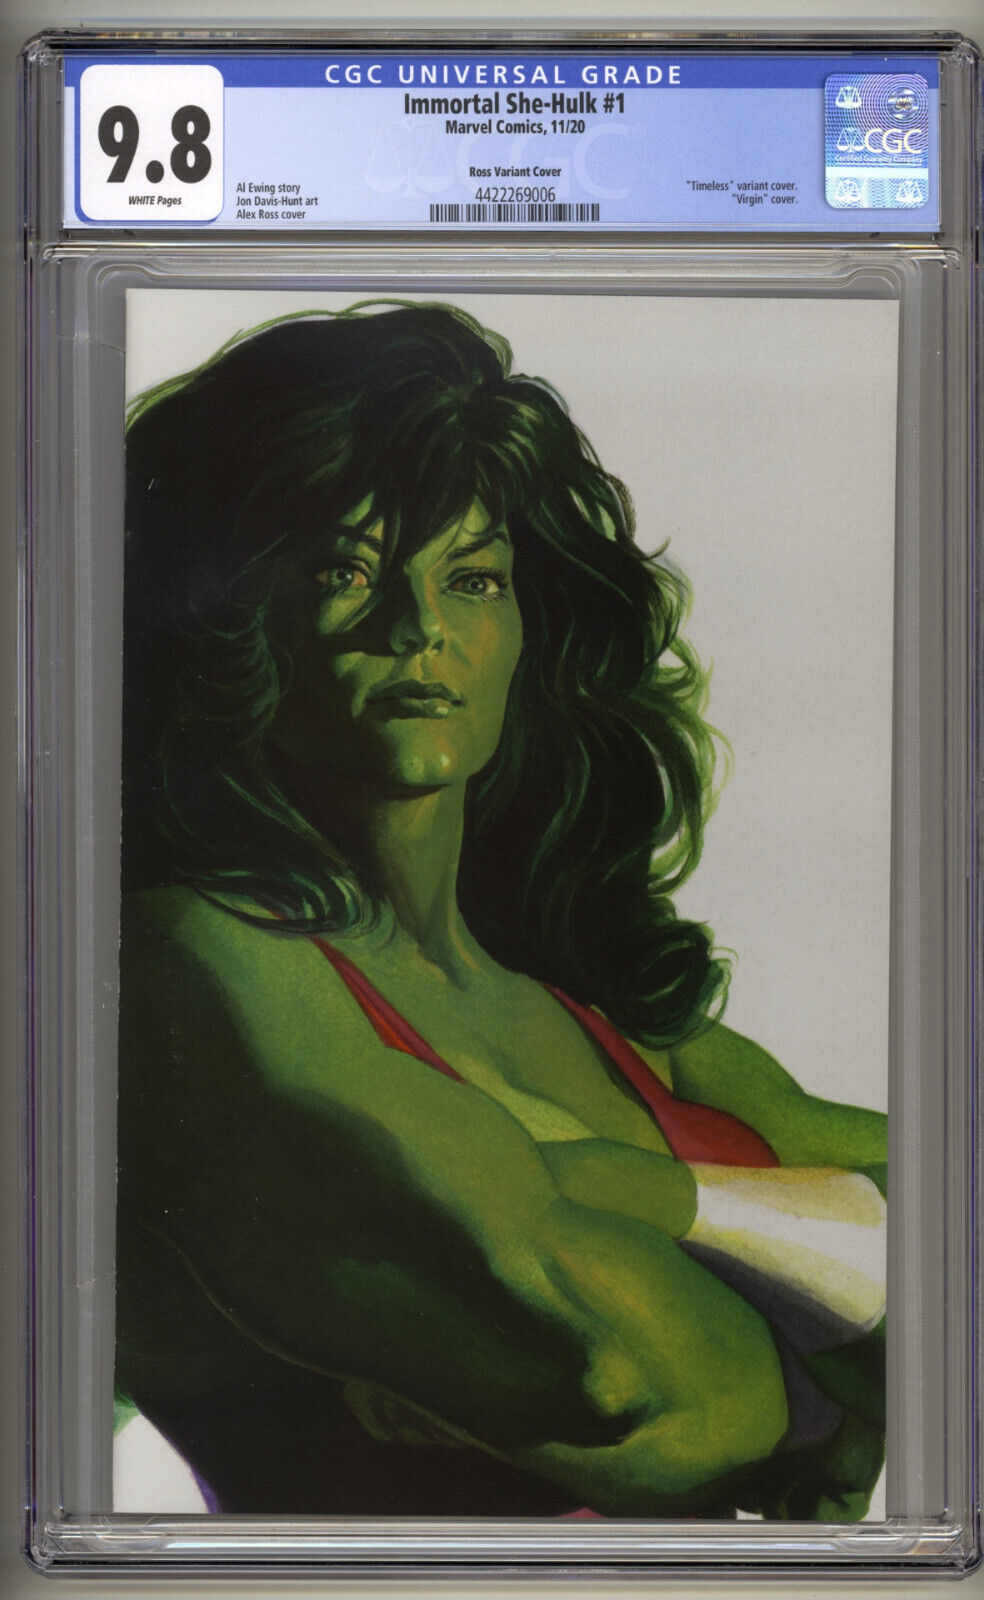 Immortal She-Hulk #1 CGC 9.8 Alex Ross Timeless Virgin Cover Highest (2020)